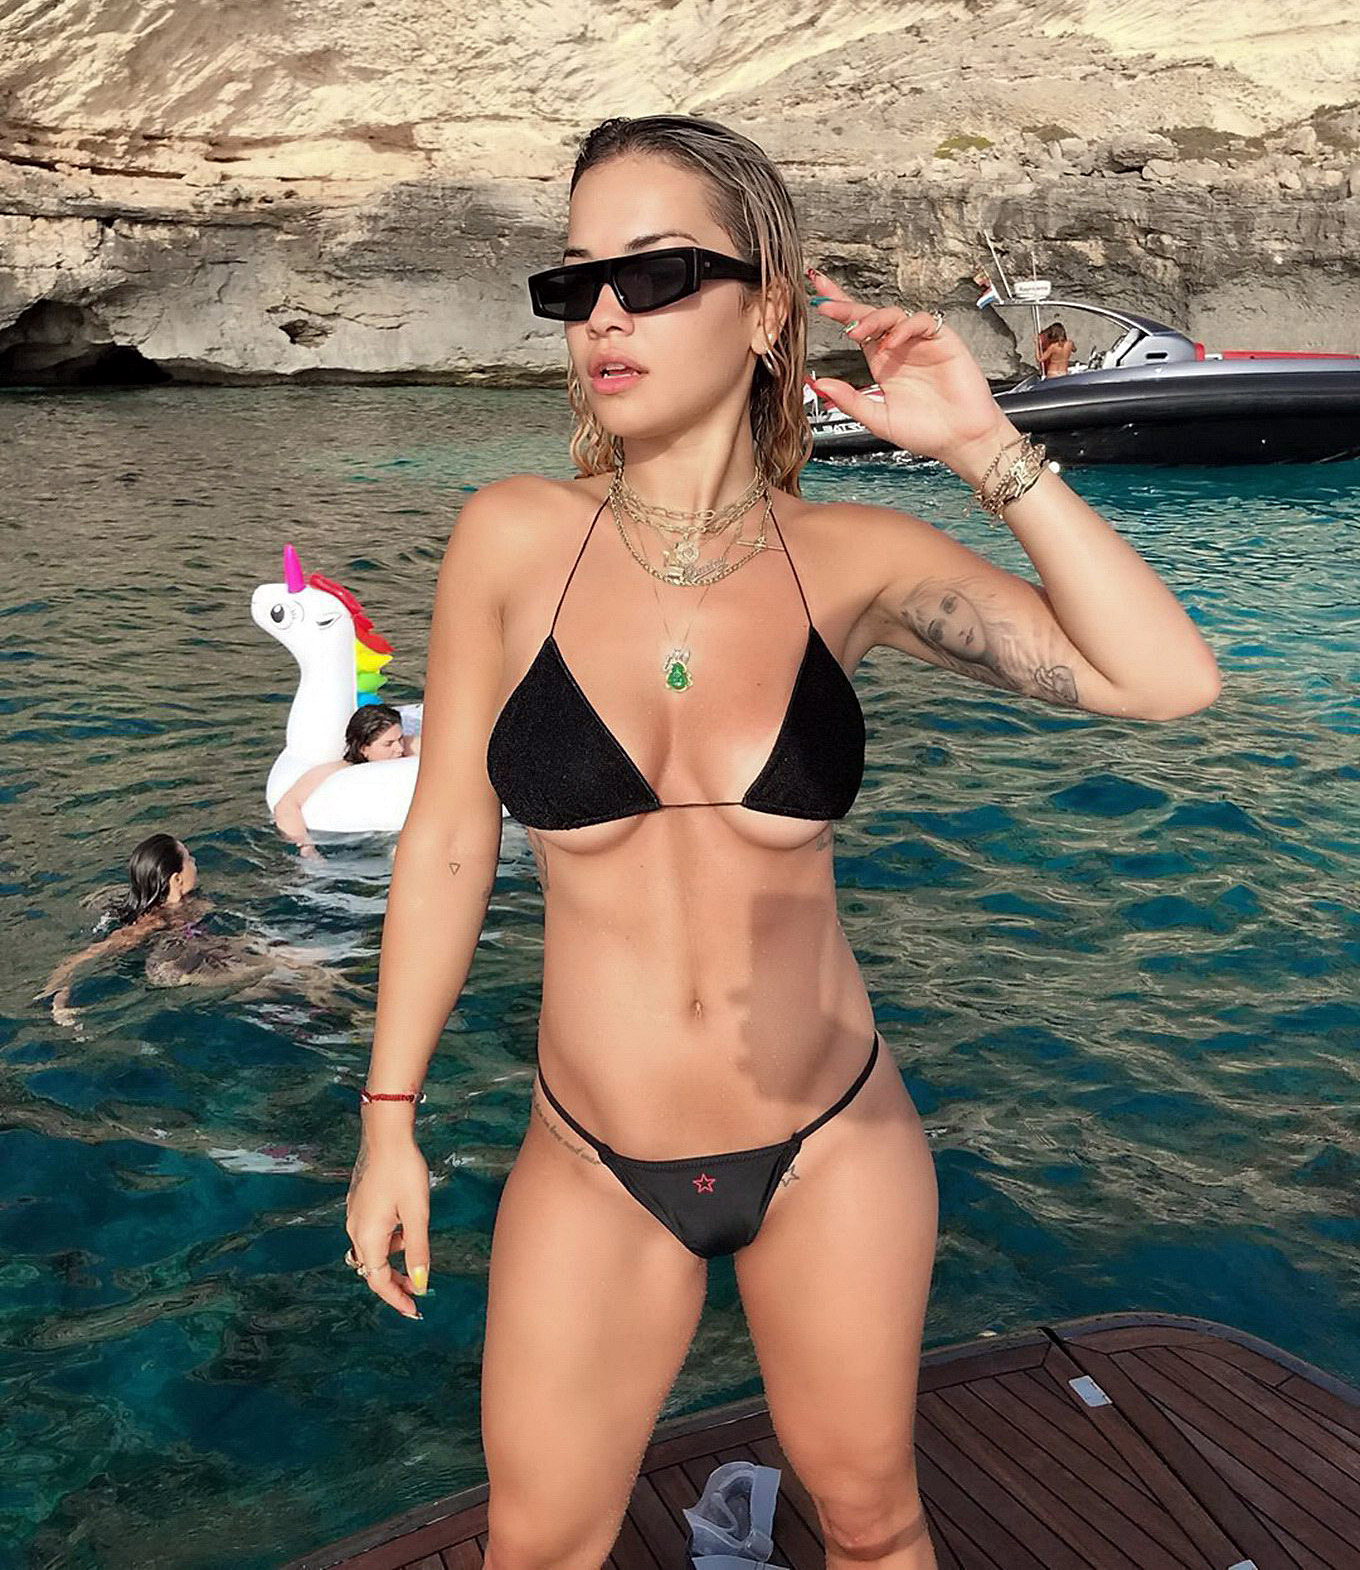 Rita Ora - Rita Ora Big Tits Pics You Won't Resist - ScandalPost